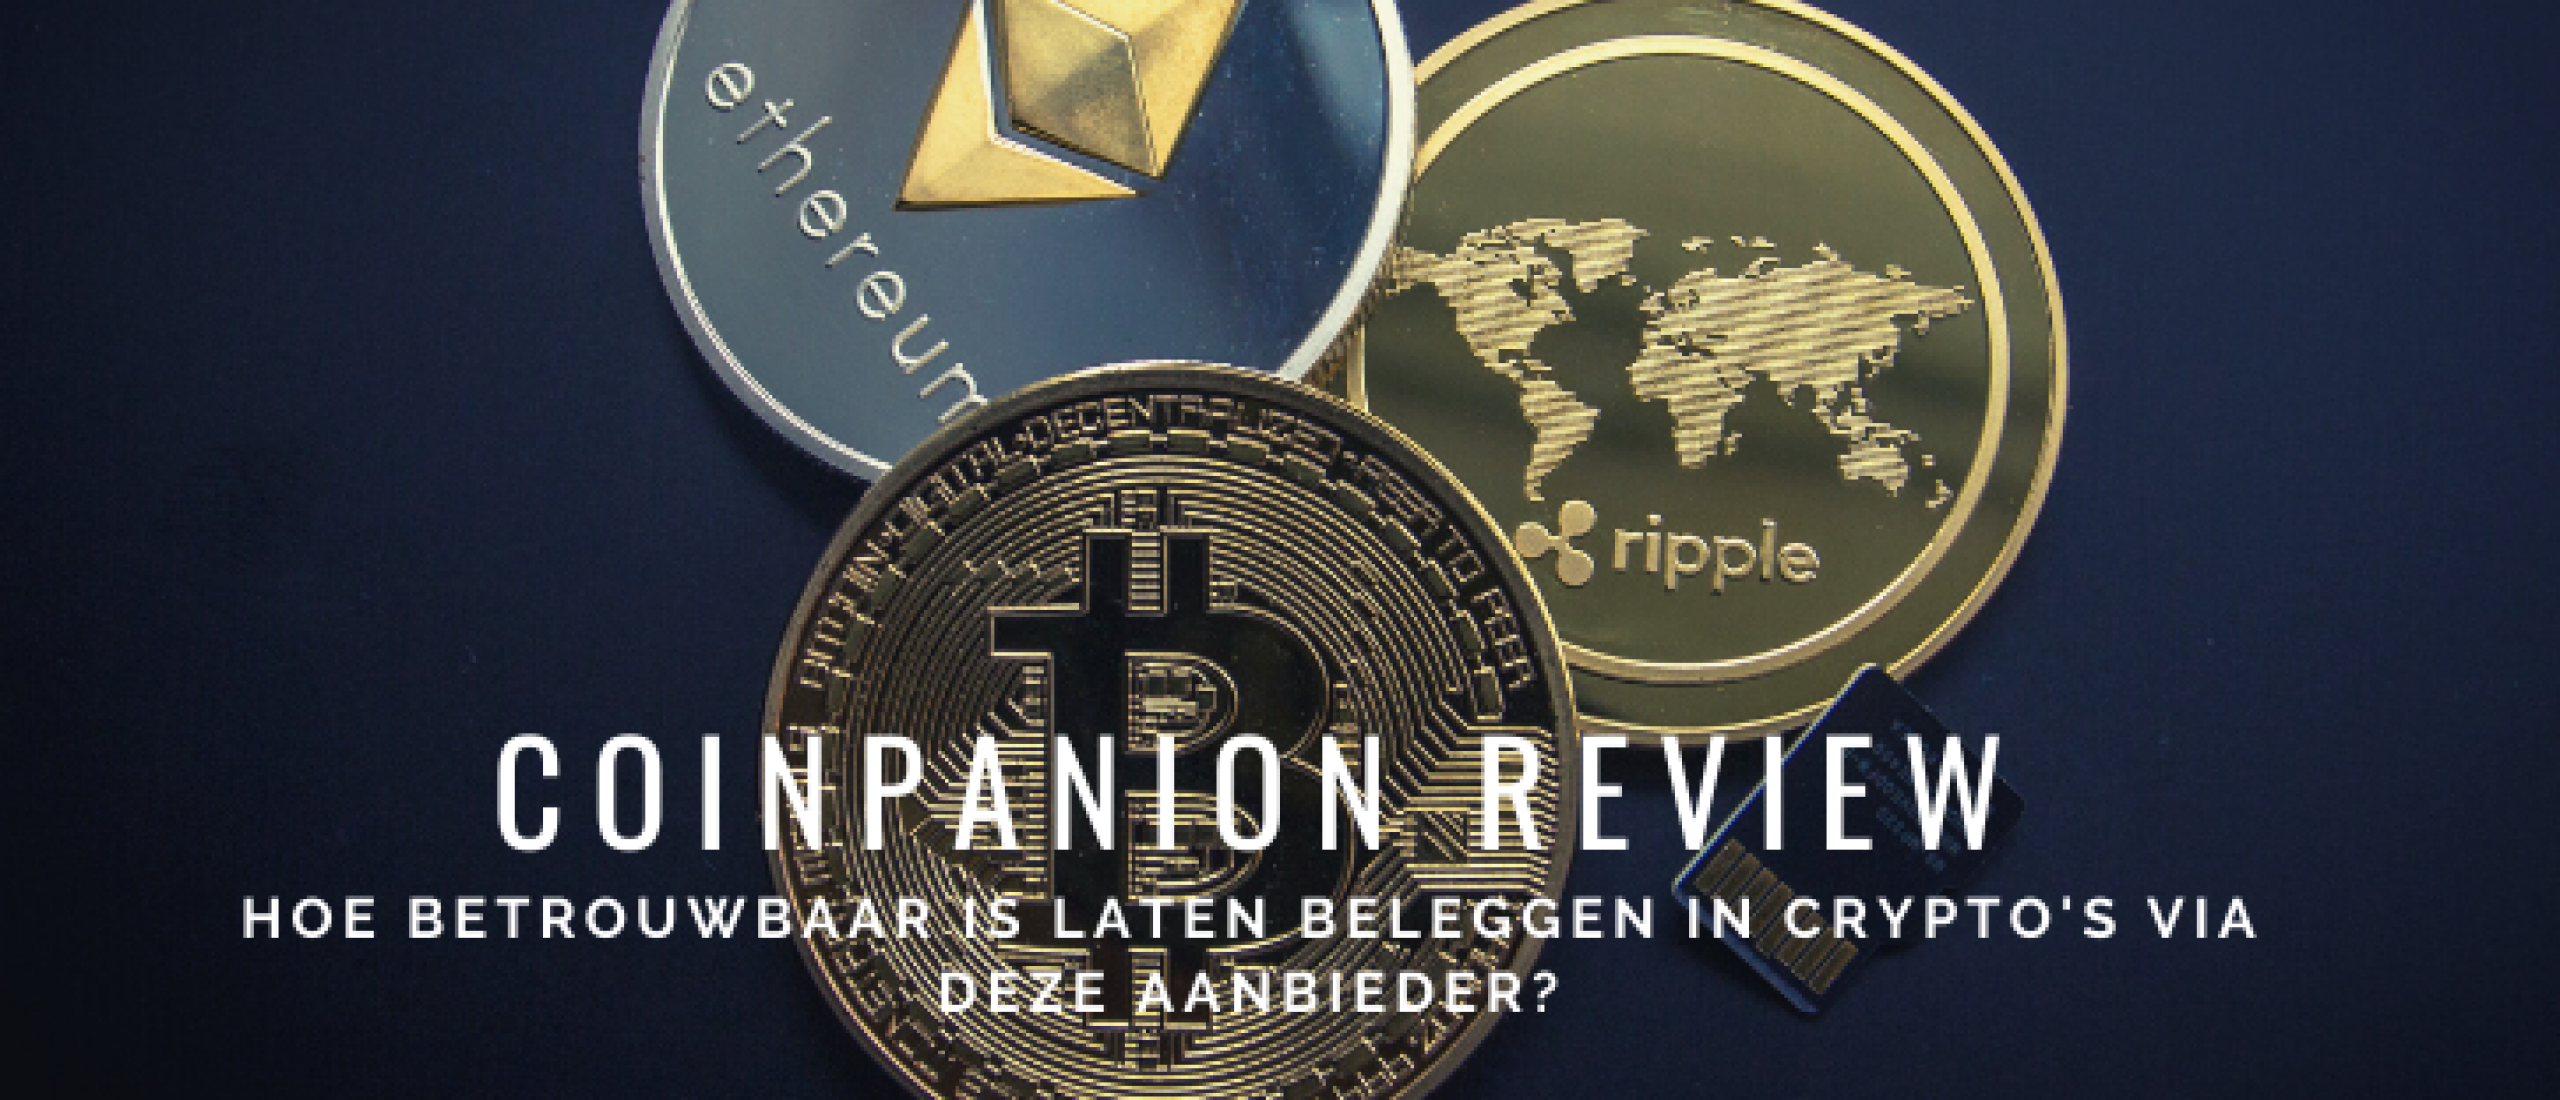 coinpanion-review